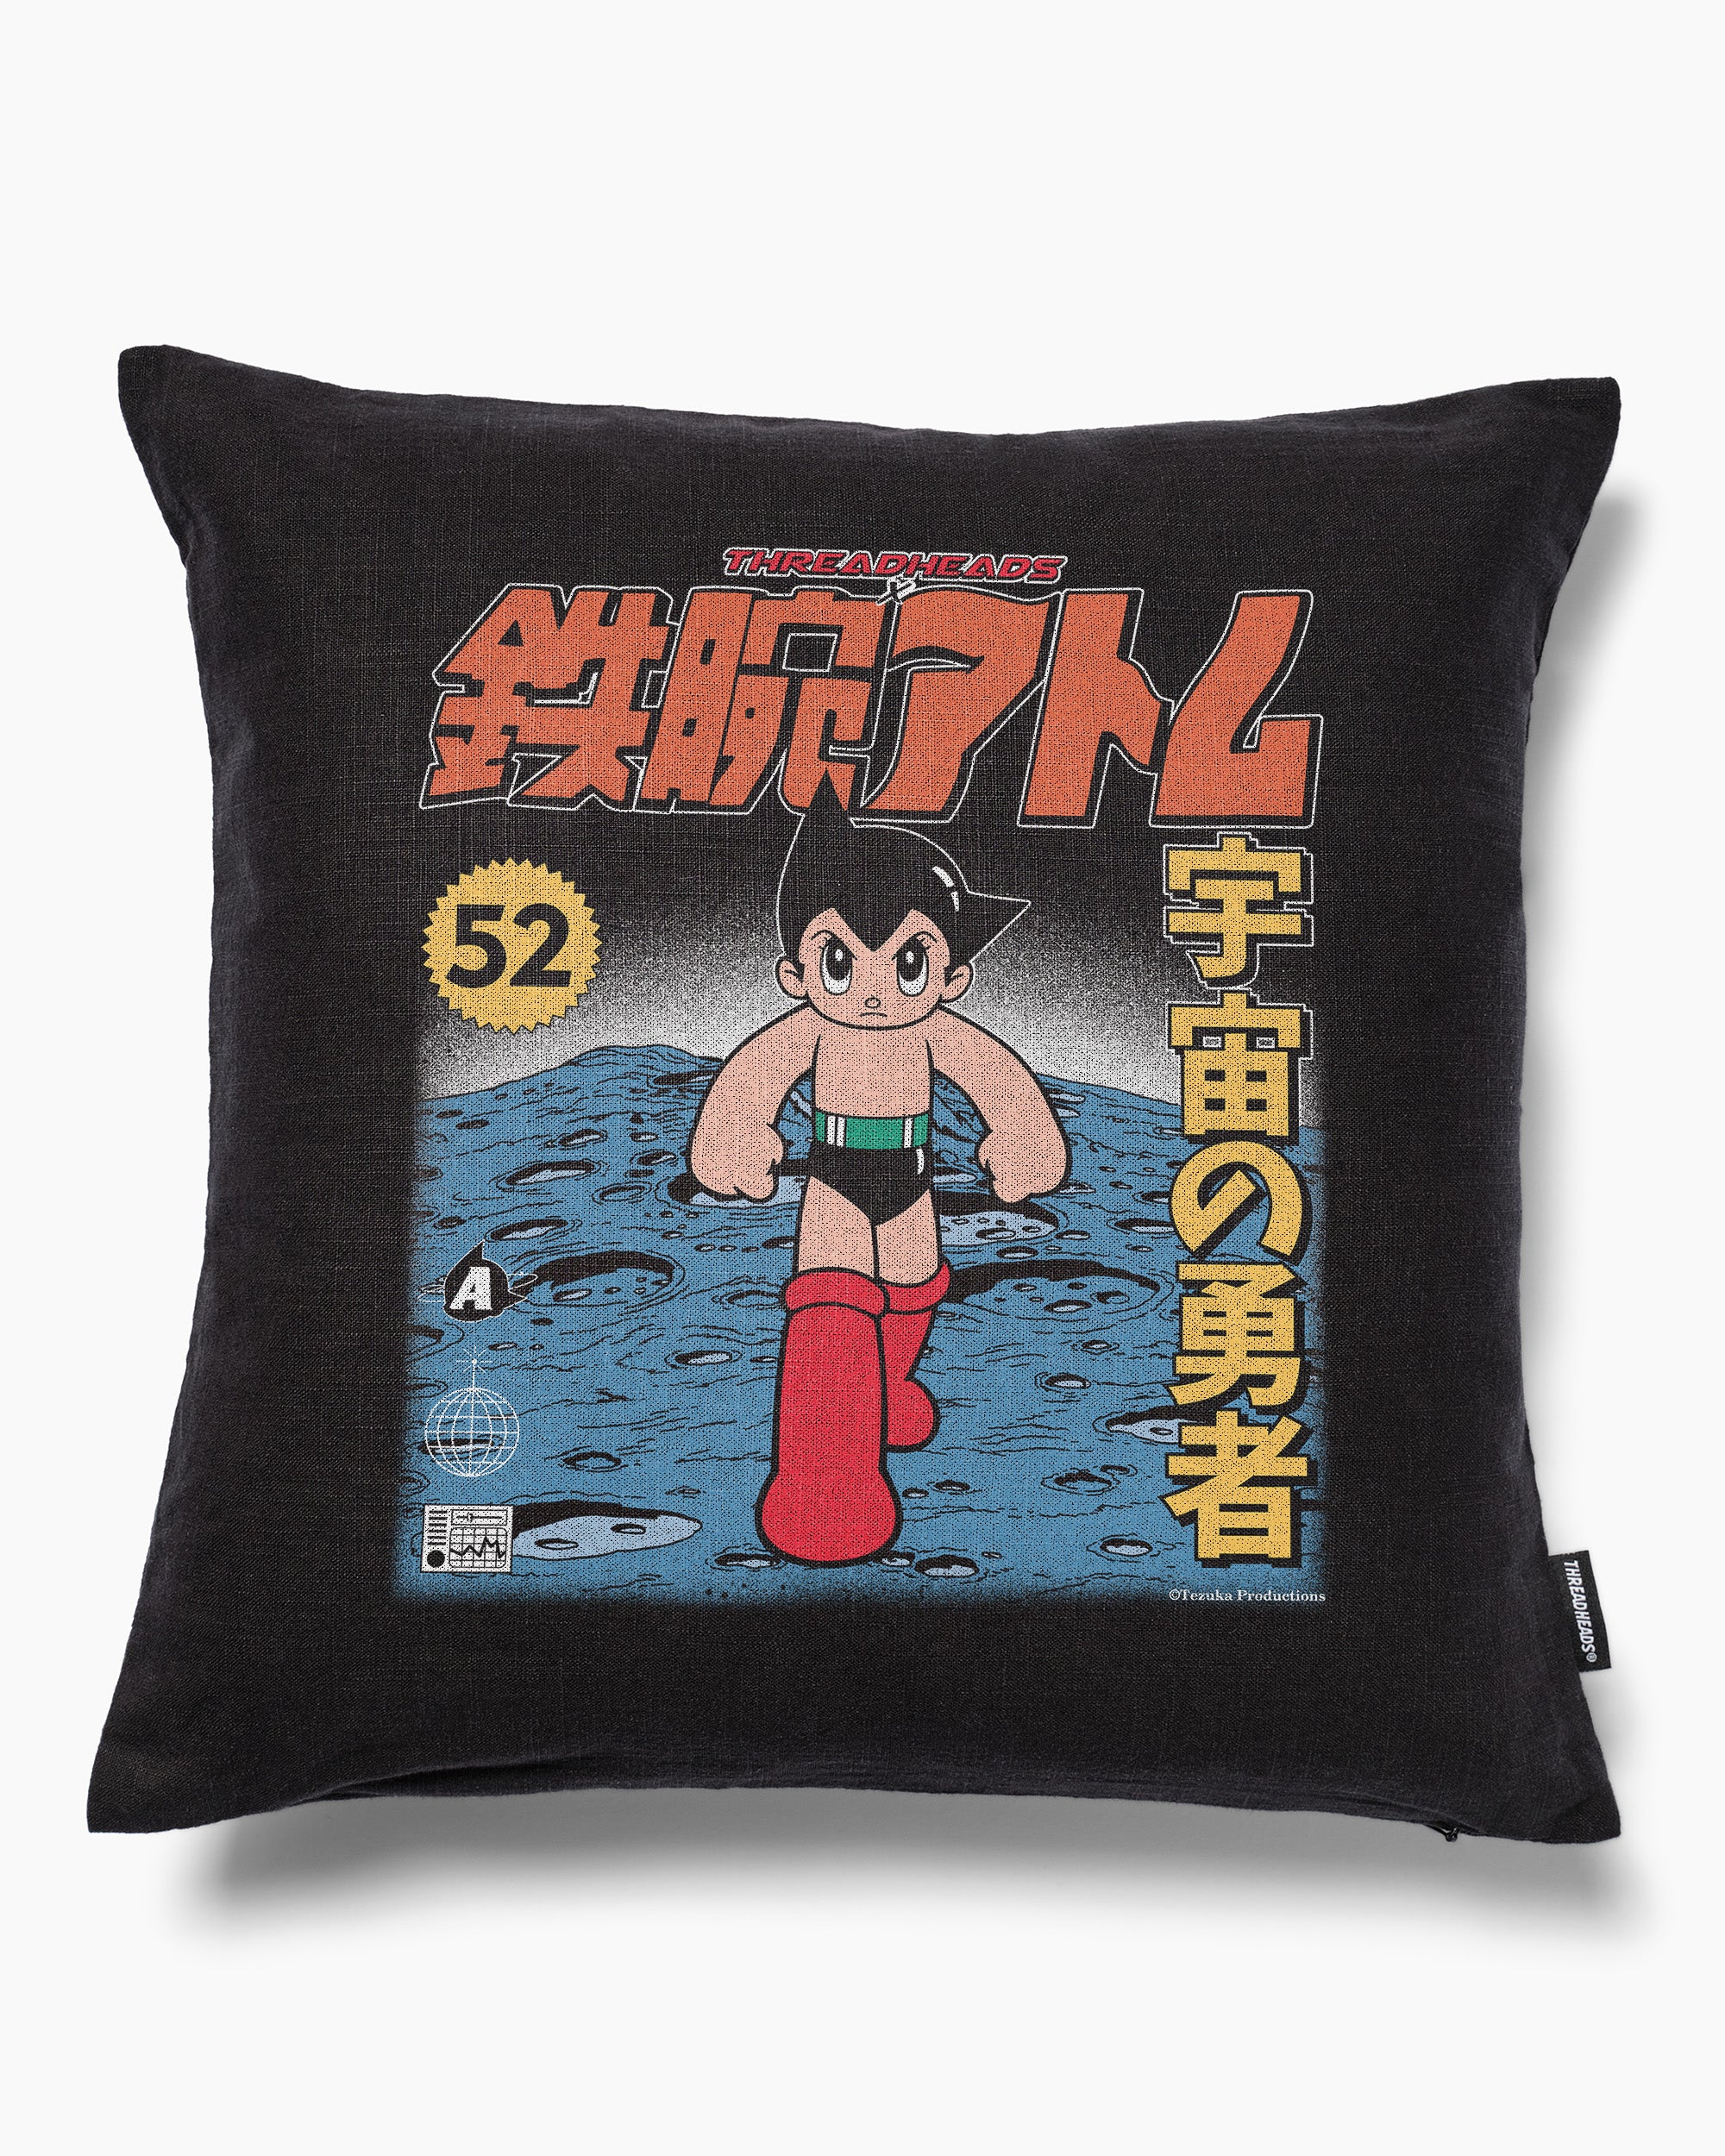 Astro Boy Moon Cushion